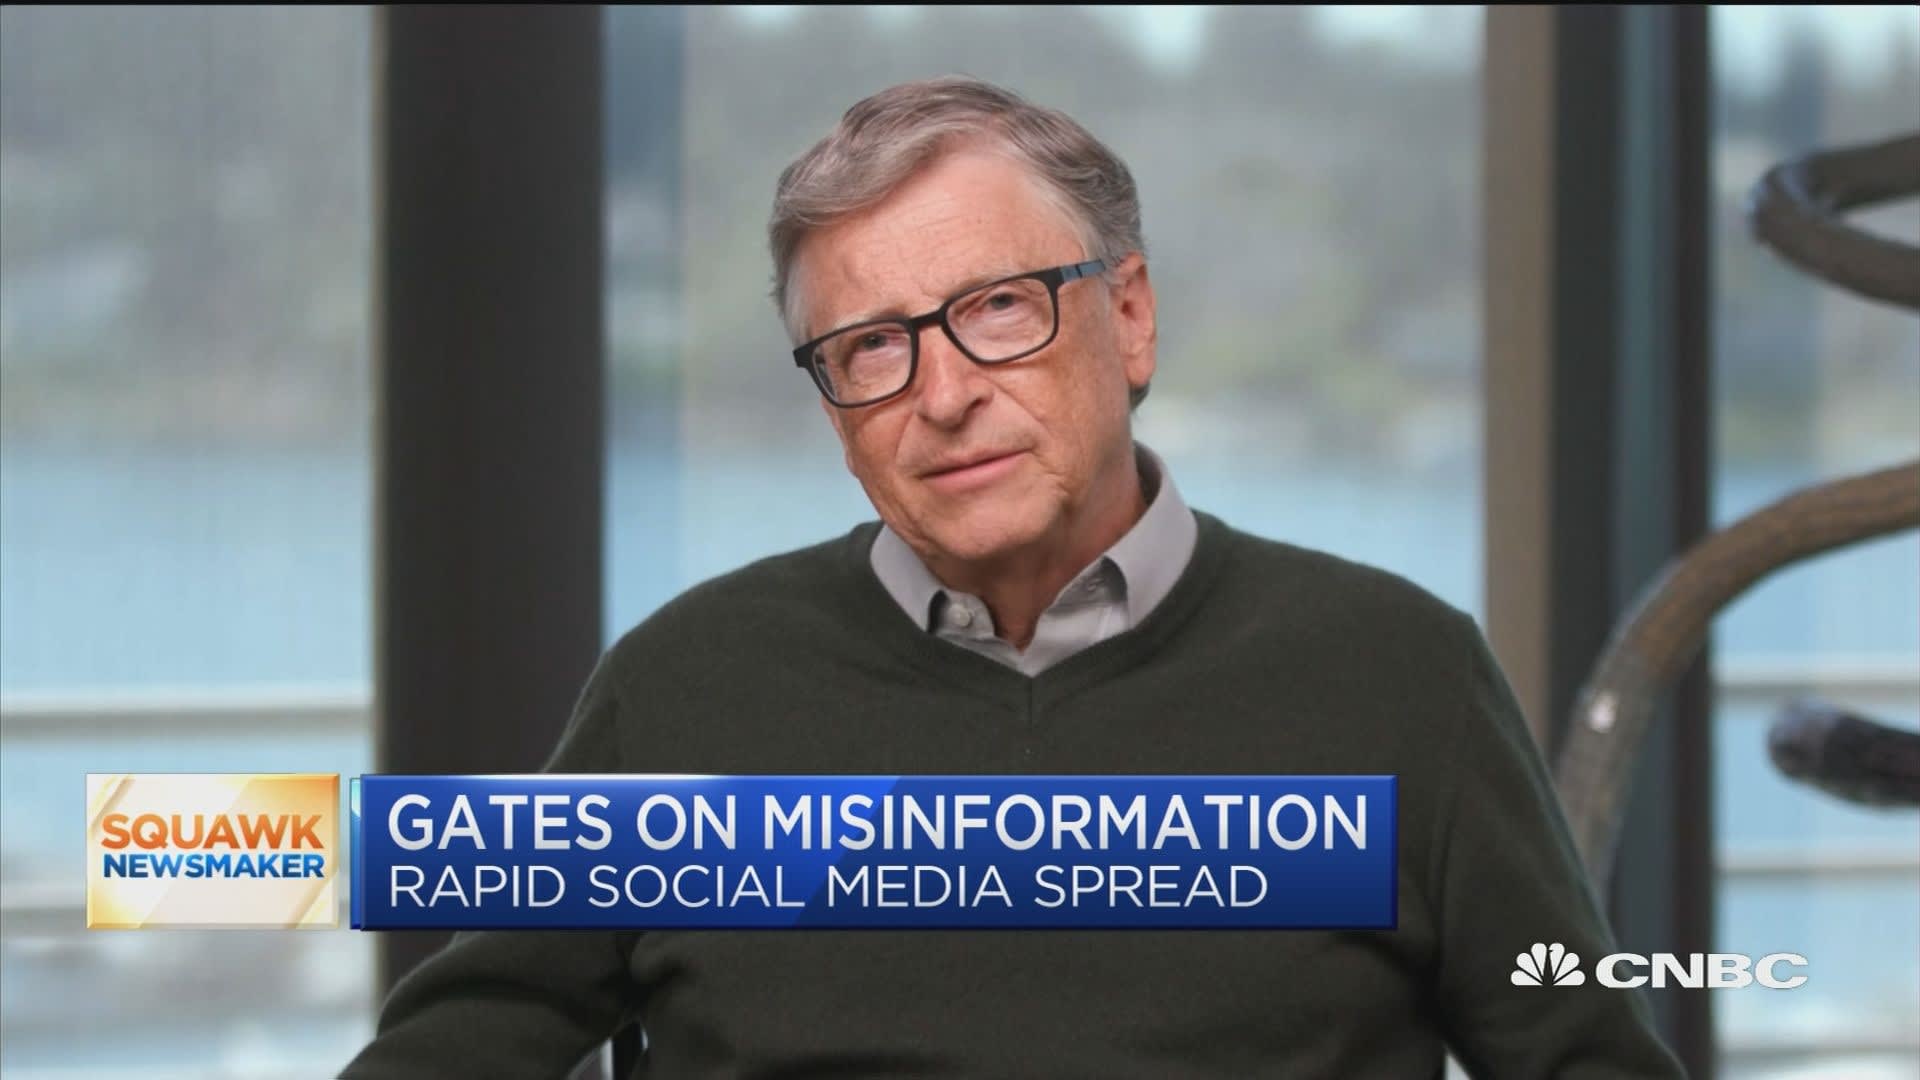 Bill Gates: Lies spread faster than facts on social media